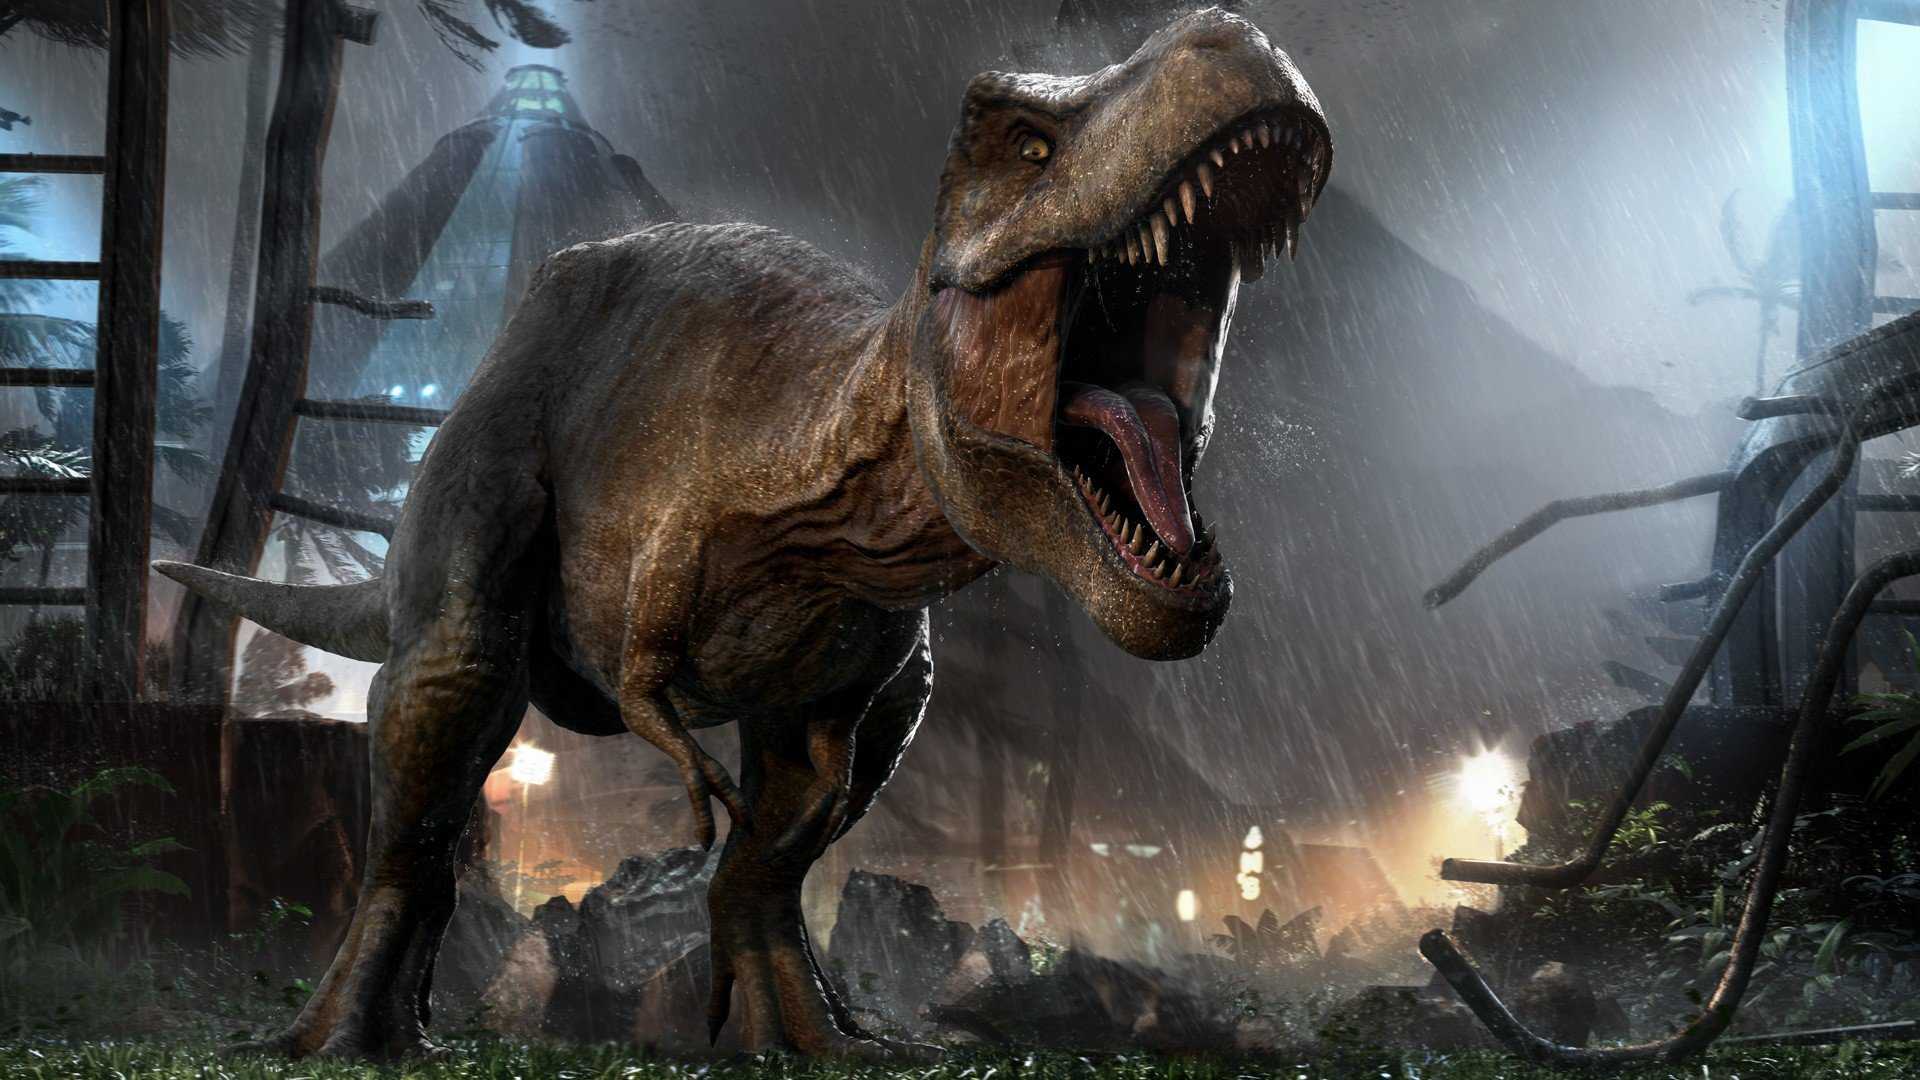 Jurassic world evolution 2: теория хаоса - советы и рекомендации